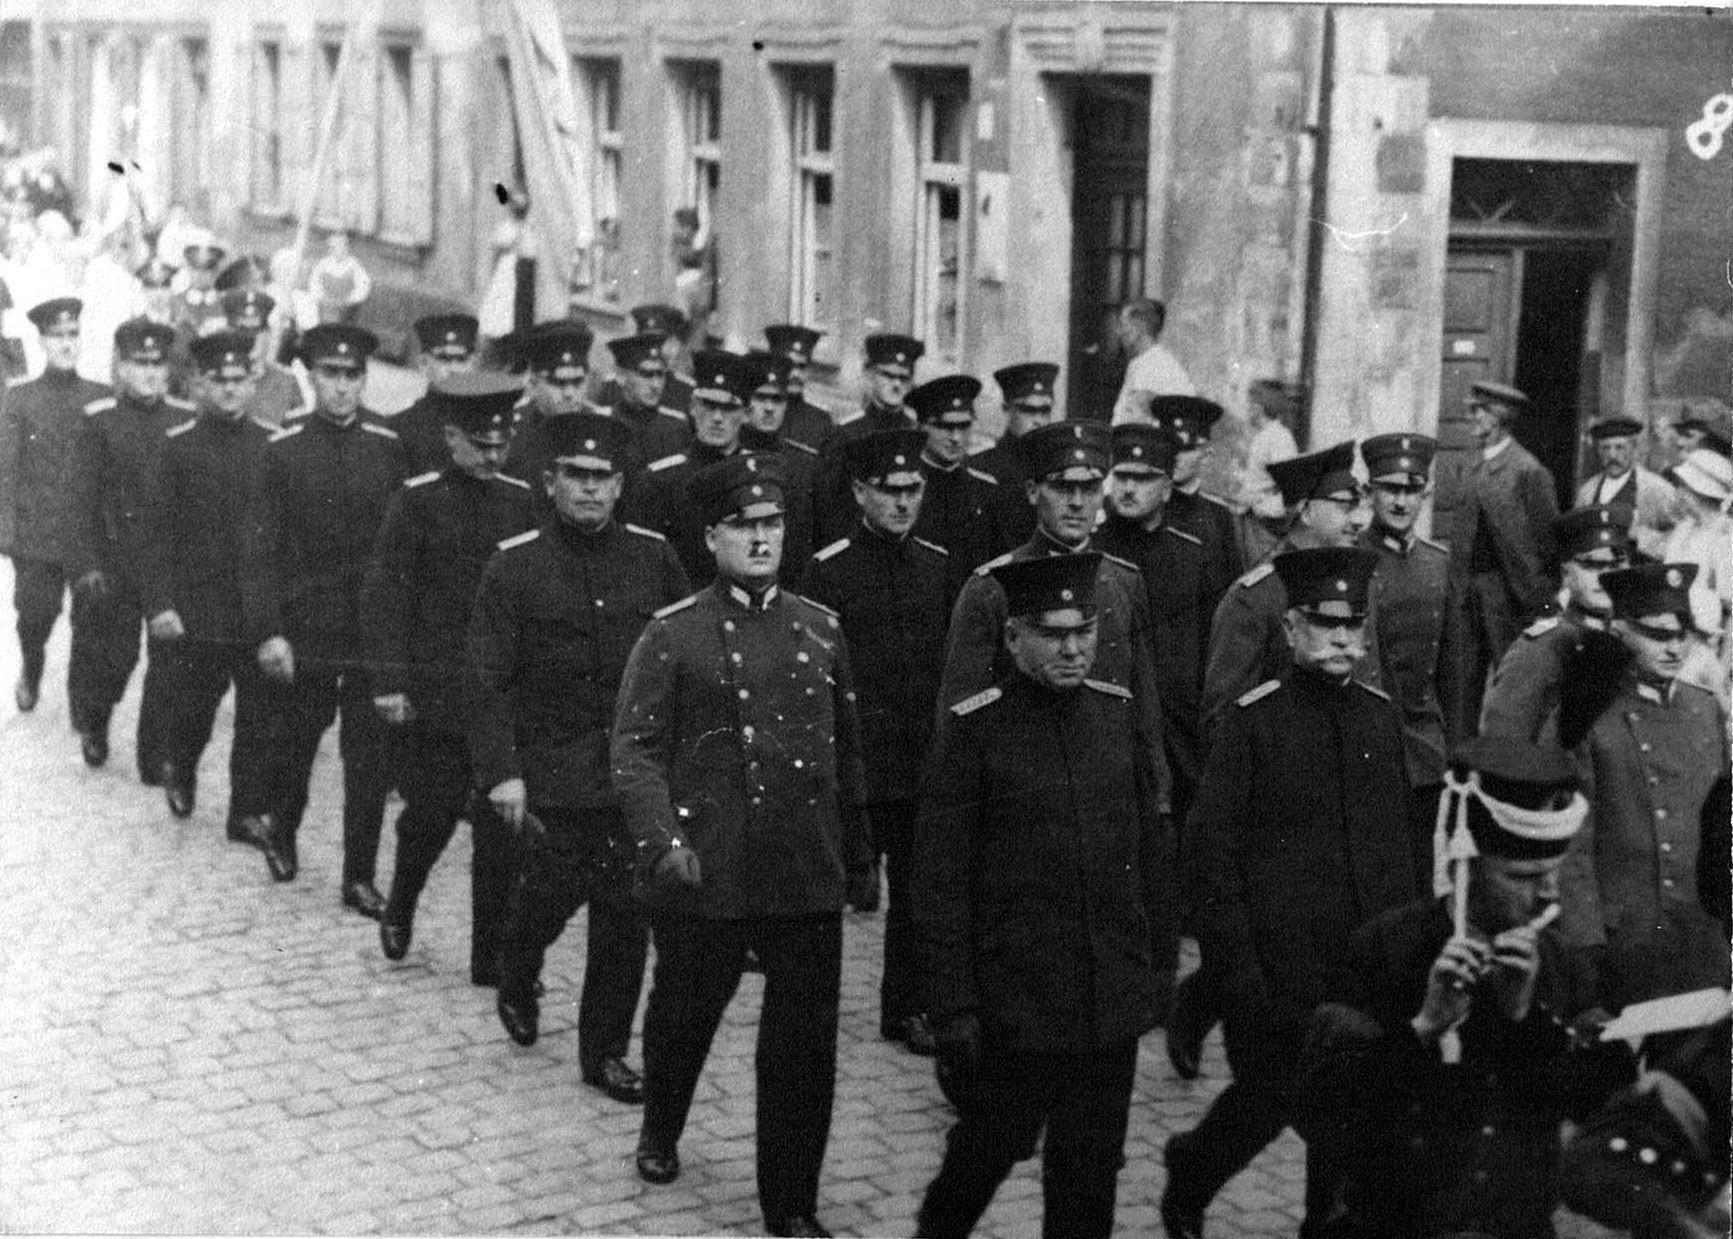 Foto-Sammlung Adolf Krapp, Ordner 11: Polizei beim
Wurstmarktumzug, 1932 (Museumsgesellschaft Bad Dürkheim e.V. CC BY-NC-SA)